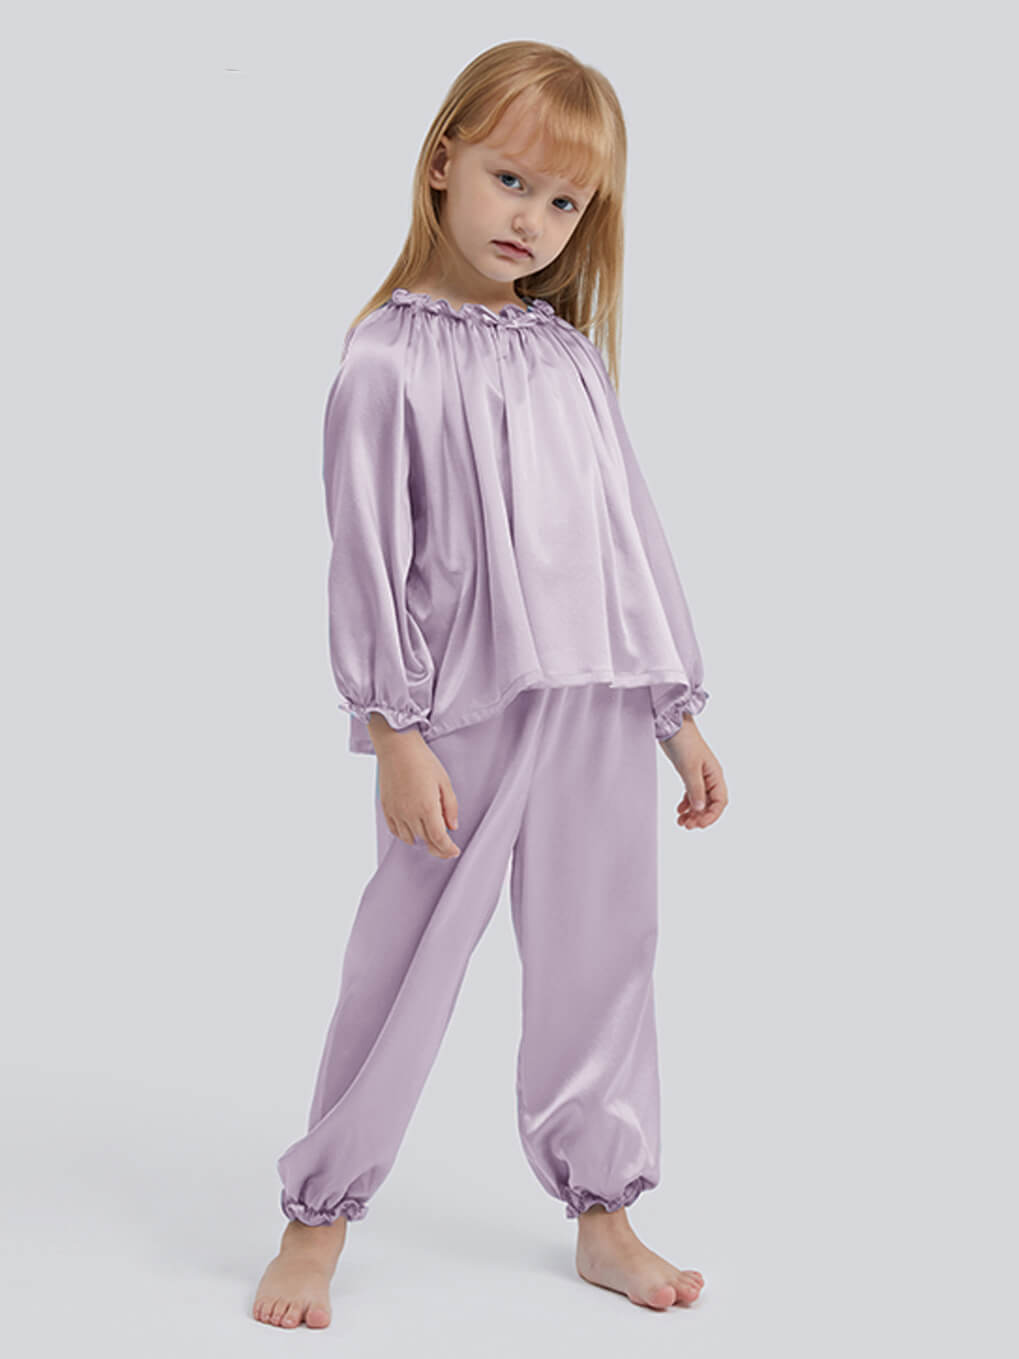 Kids Satin Pajama Sets Pink Gold Silk Pajamas Long Sleeve Top